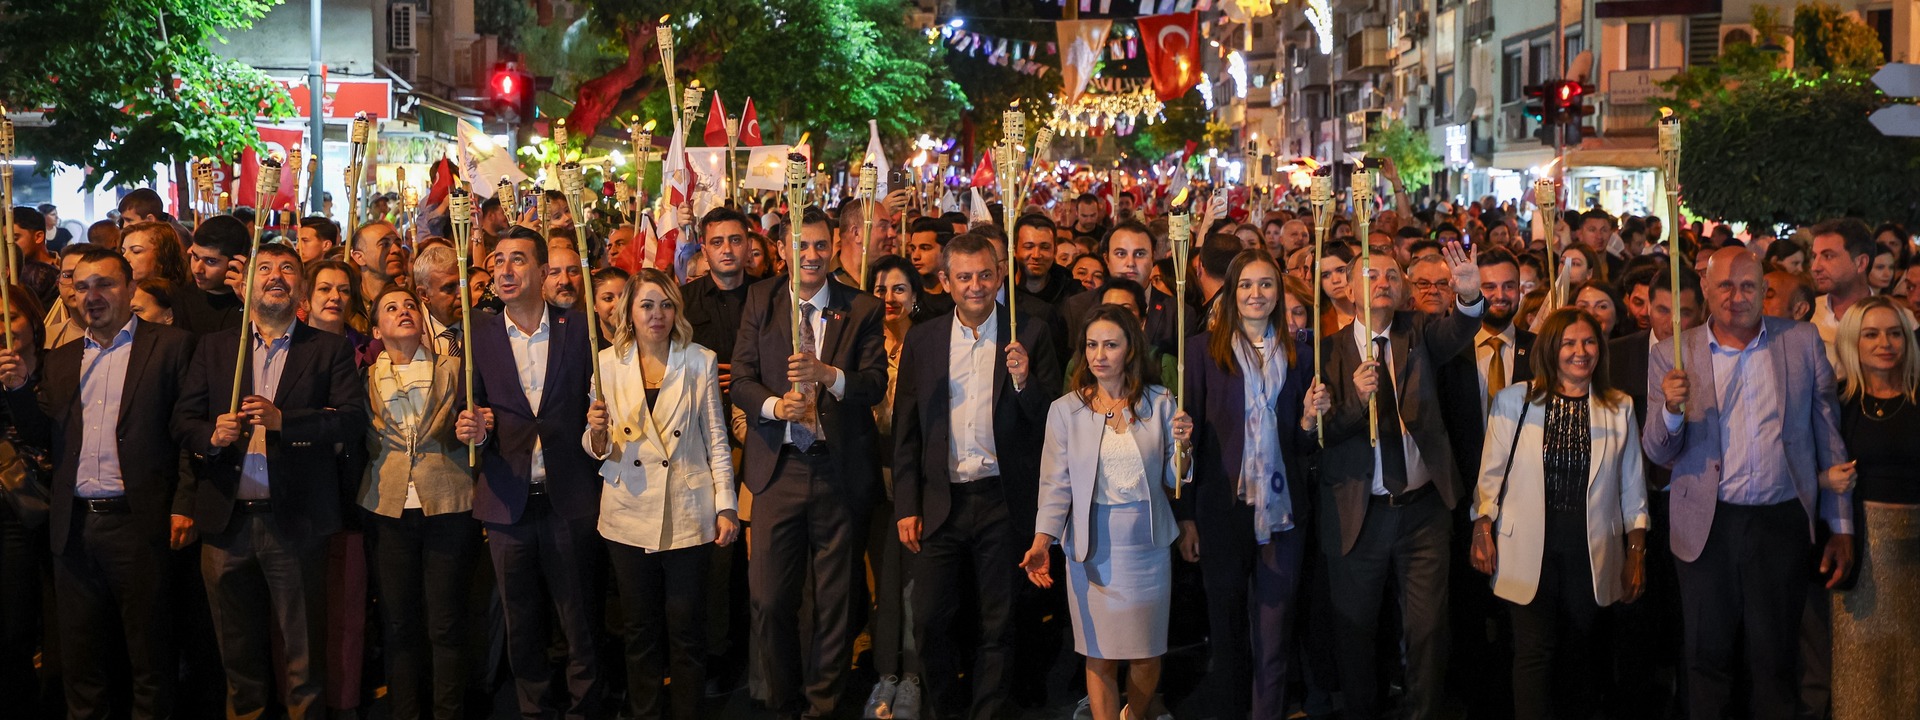 Cumhuriyet Halk Partisi ,CHP Lideri Özgür Özel,484'üncü Uluslararası Mesir Macunu Festivali,Manisa,Fener alayı,chp.org.tr